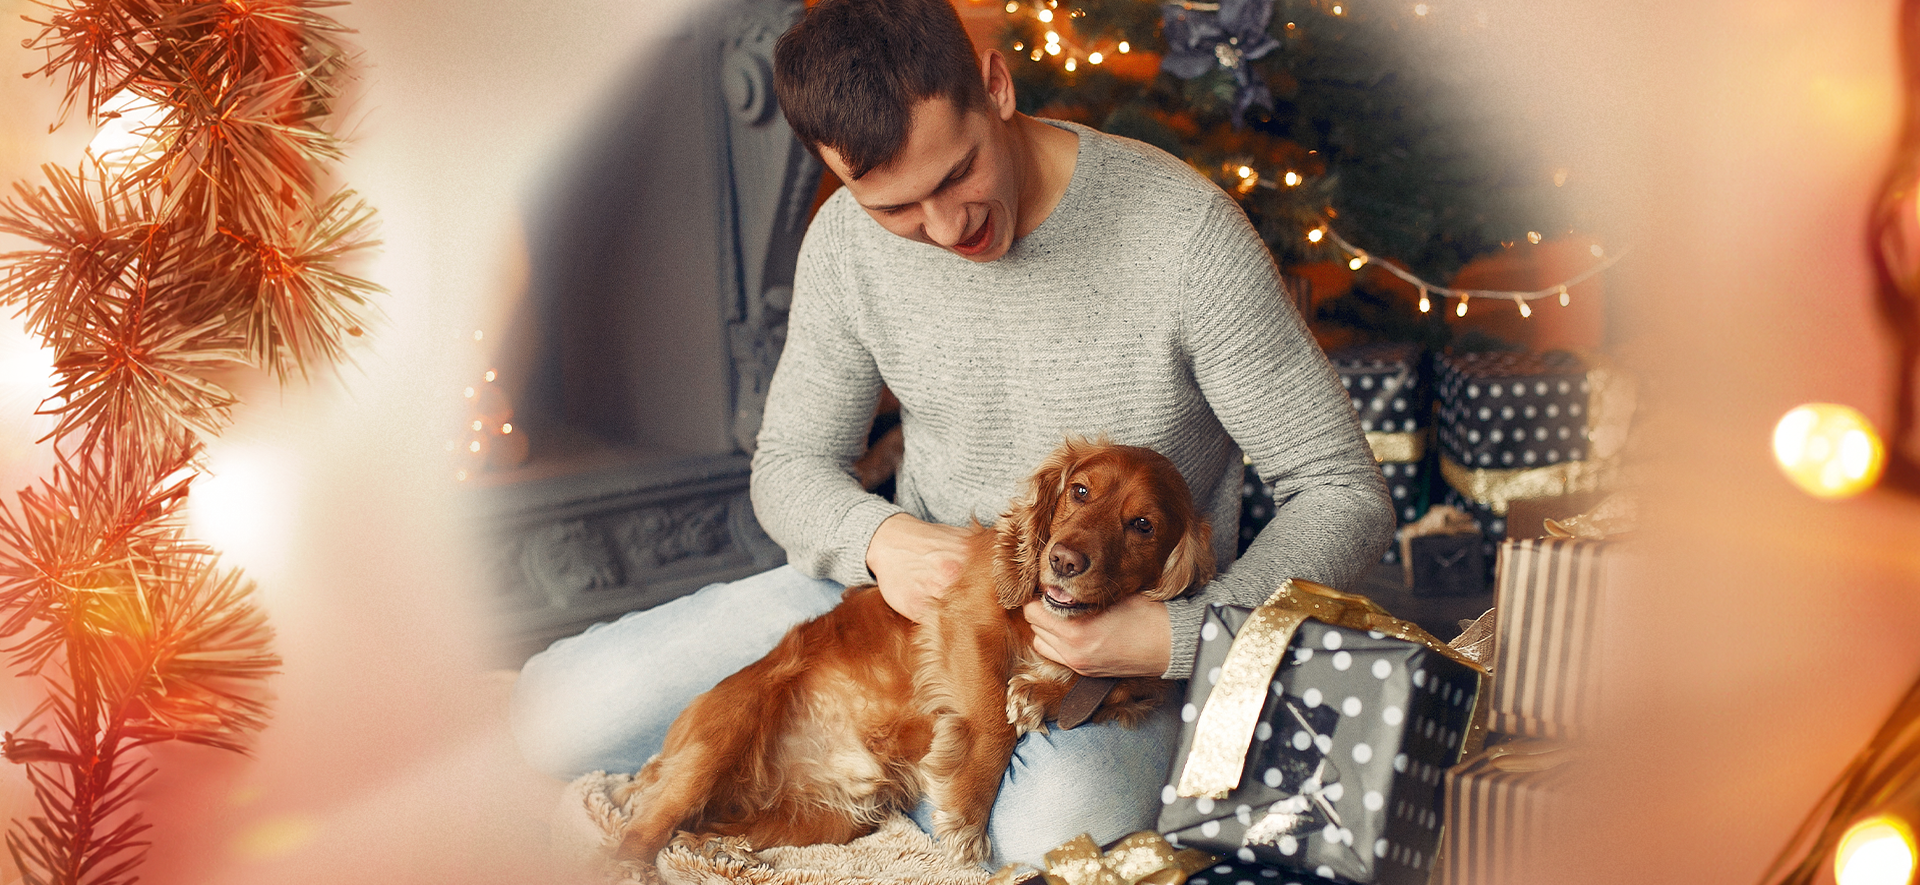 Planea la próxima aventura con tu perro en esta Navidad